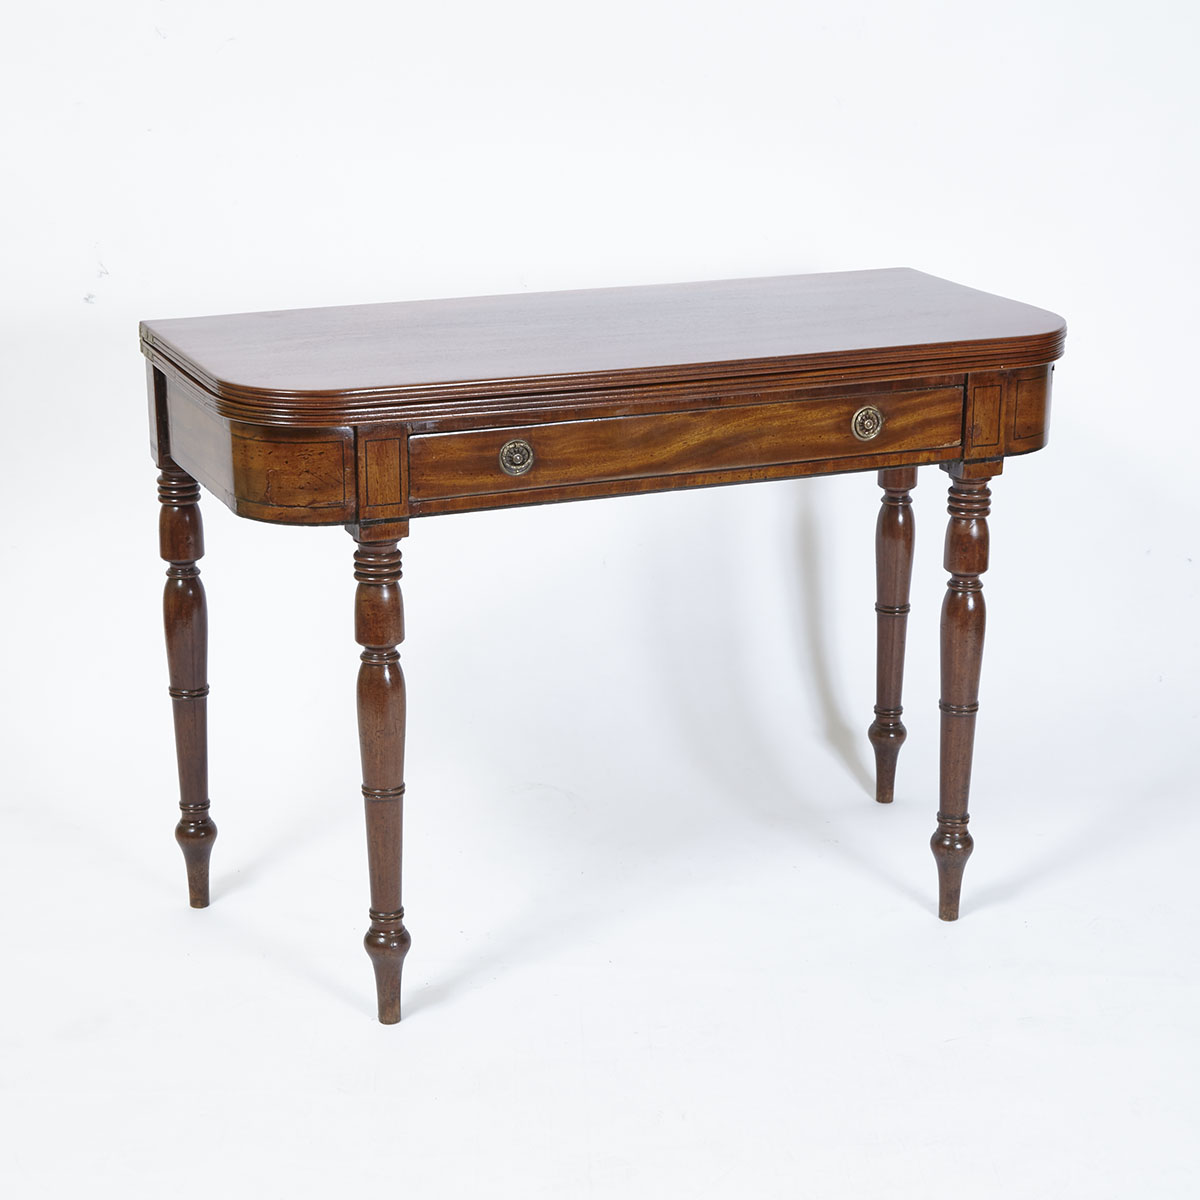 Late Georgian Mahogany Fold Over Tea Table, early 19th century